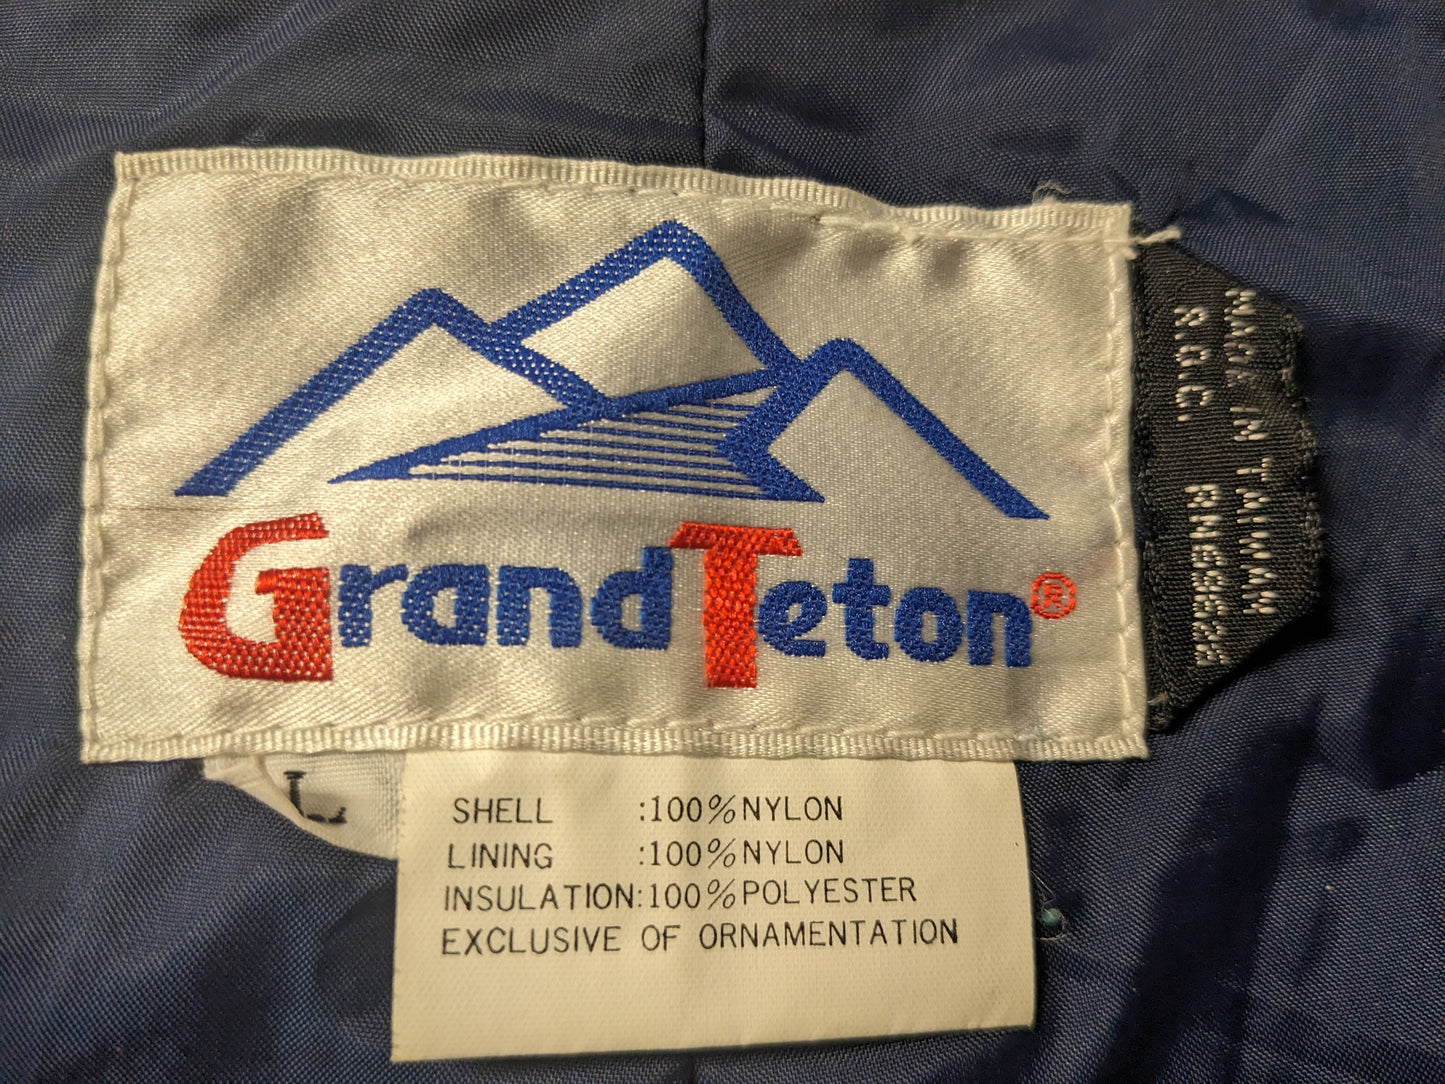 Grand Teton Ski/Snowboard Bibs Size Large Color Blue Condition Used